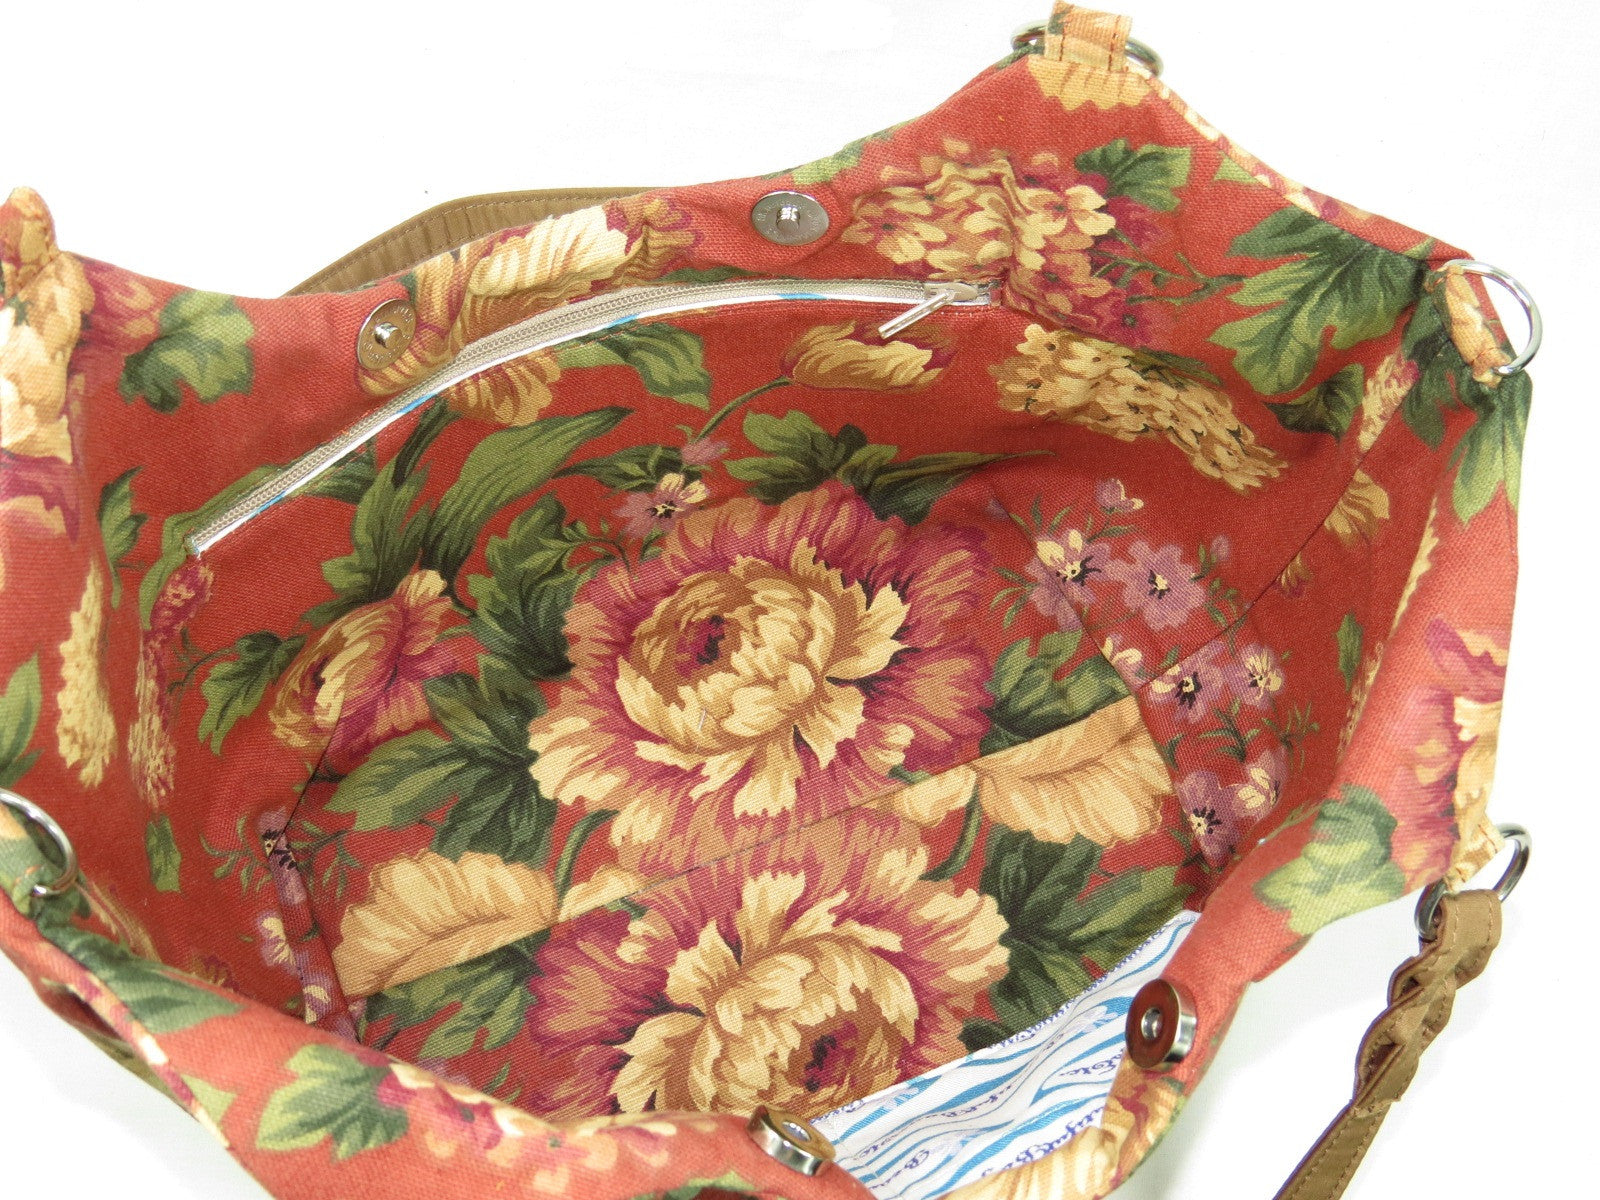 Autumn Floral Print on Canvas Tote Style Handbag interior